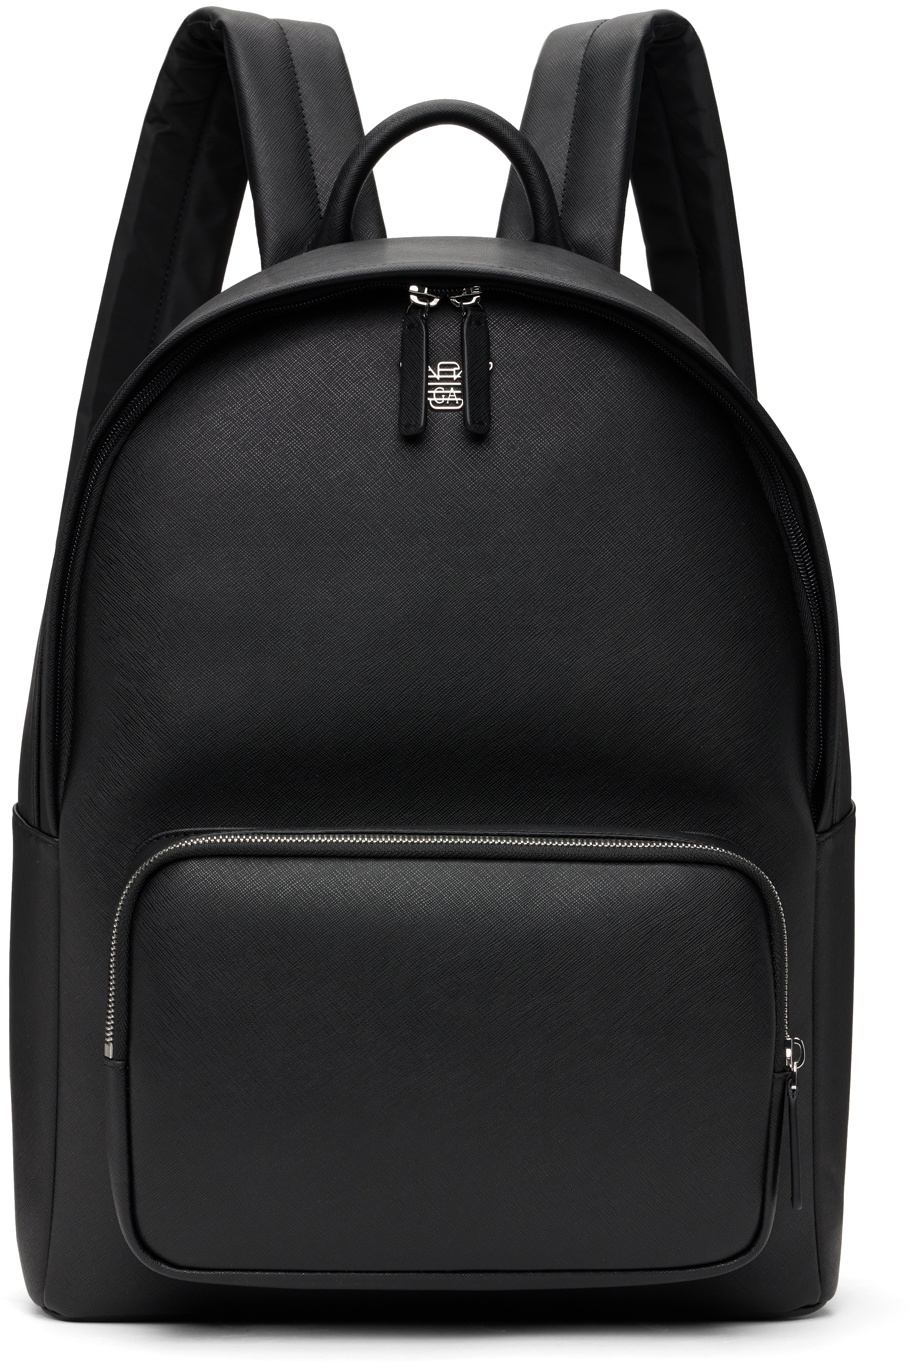 Emporio Armani Black Leather Backpack